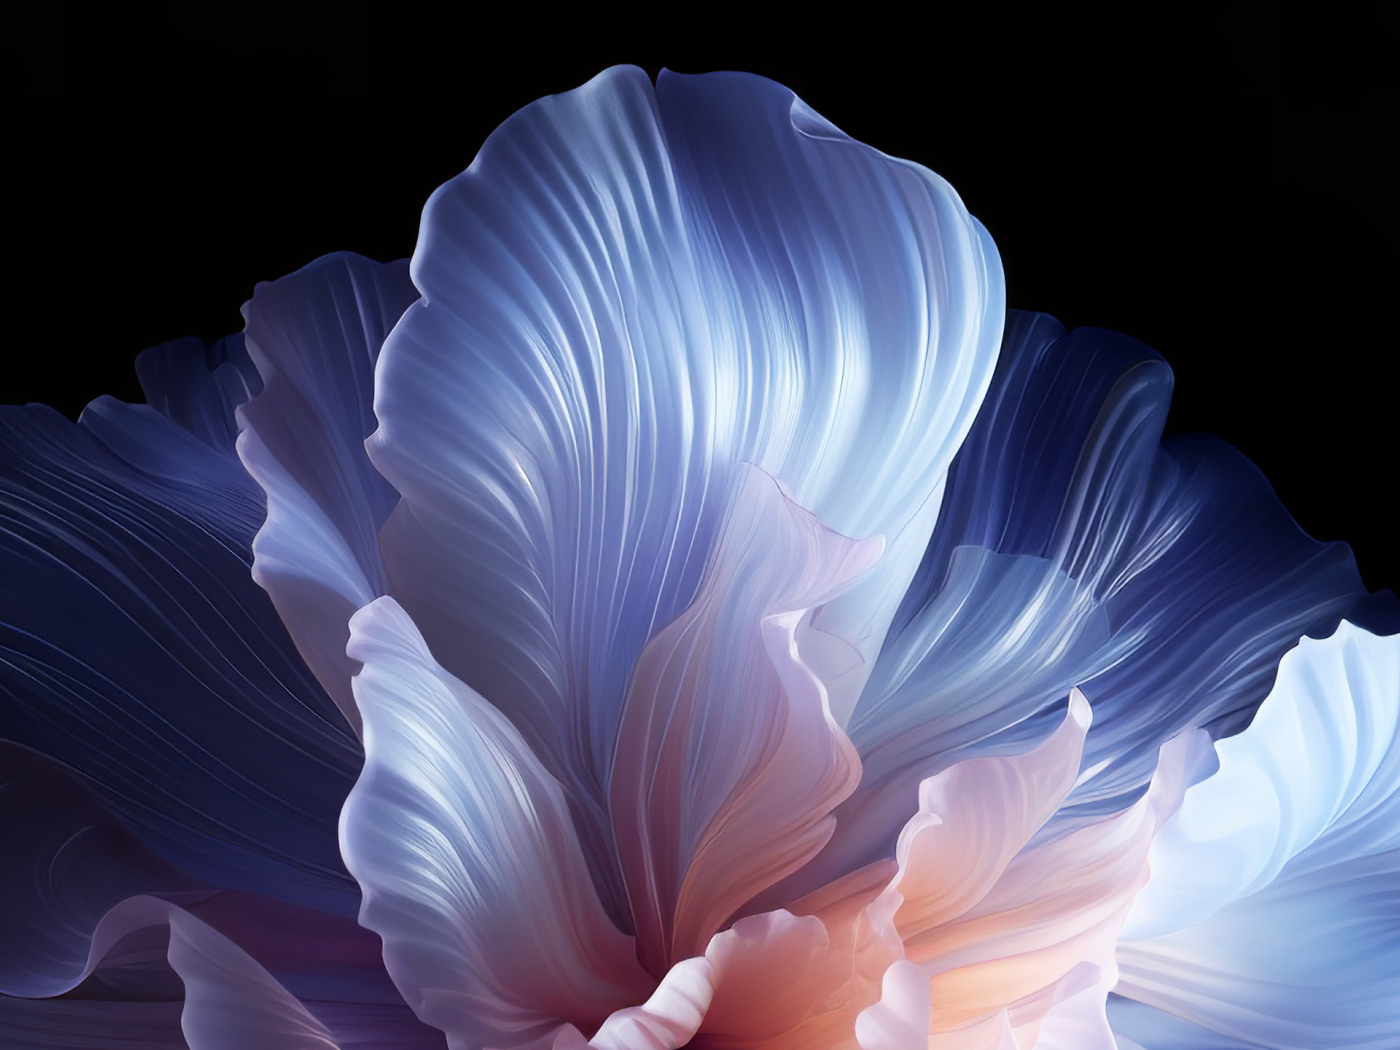 Download wallpaper 1400x1050 petal shape floral pattern, digital art ...